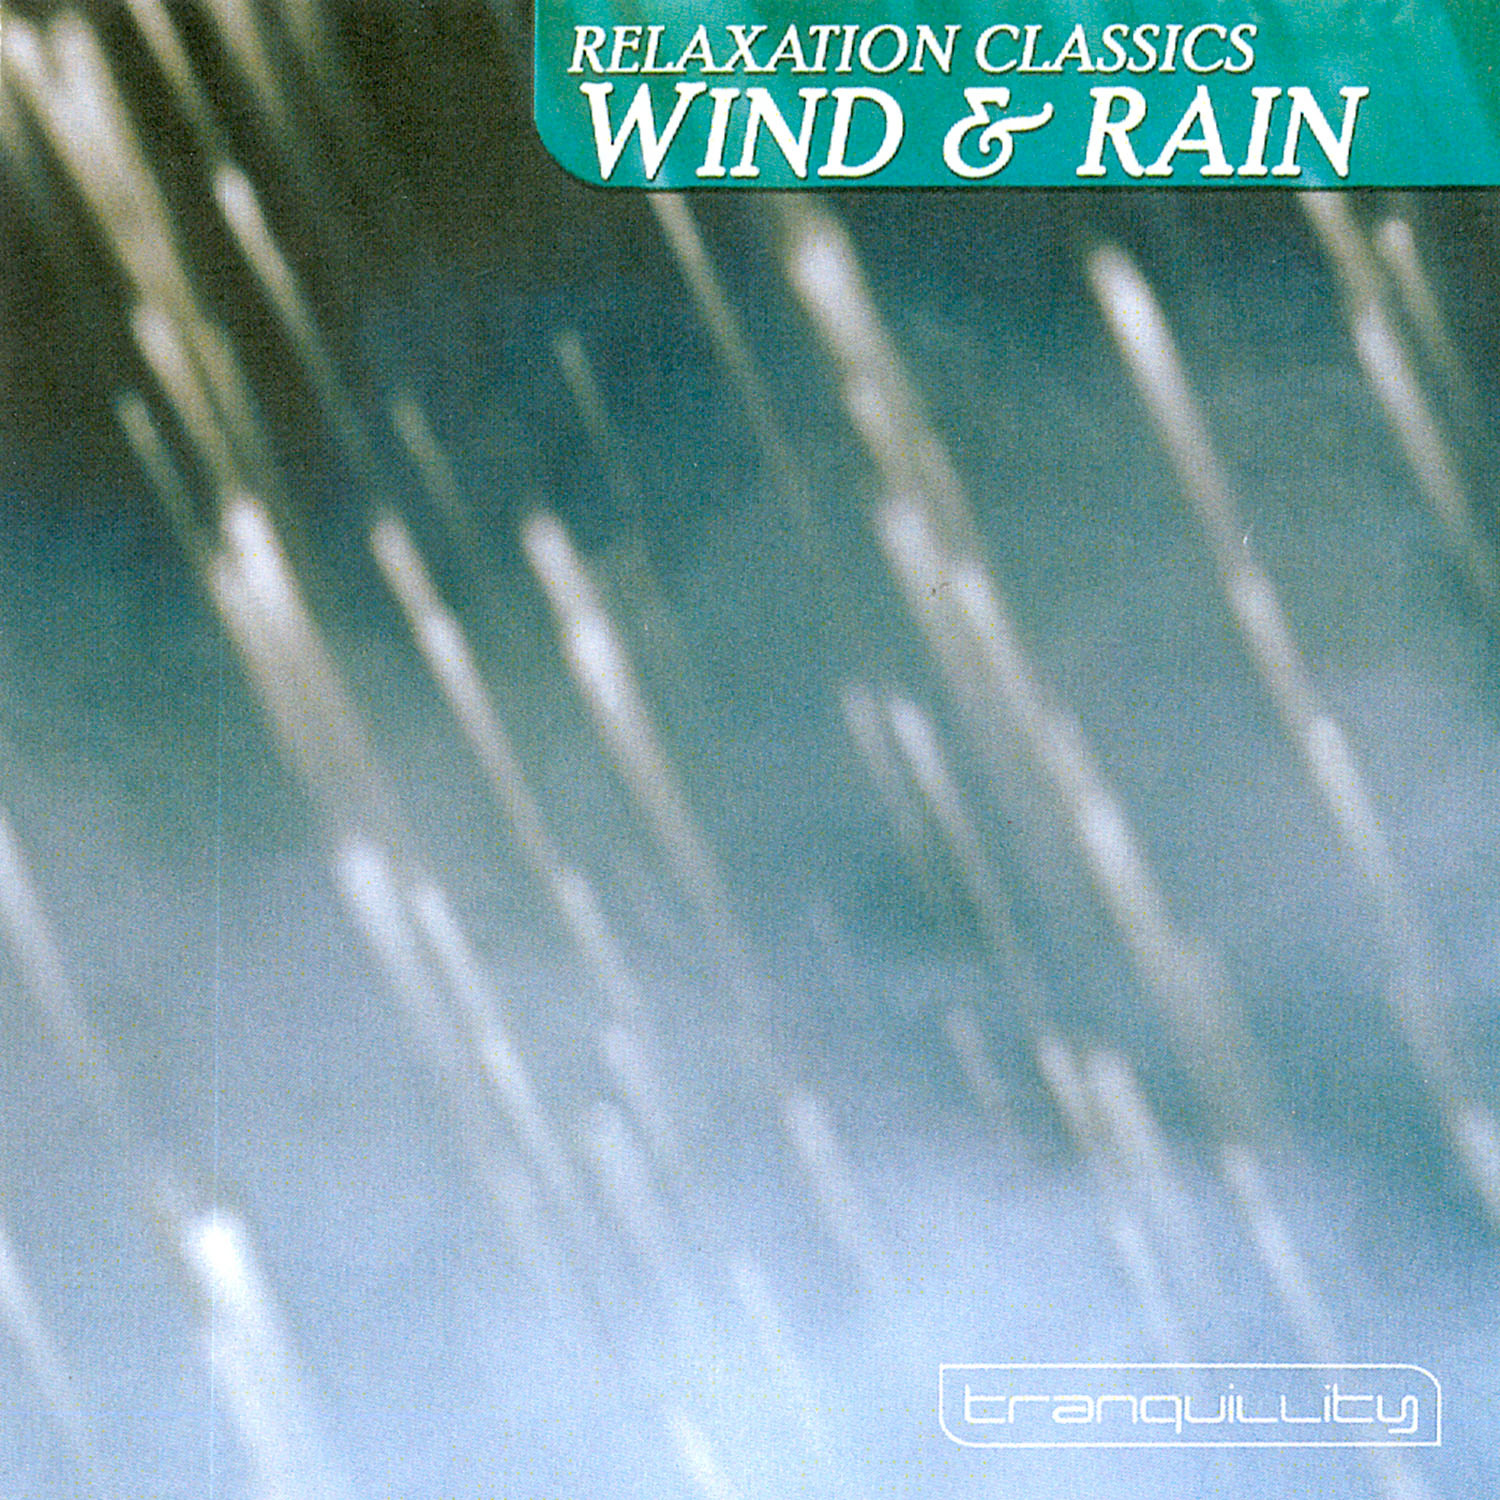 Wind & Rain